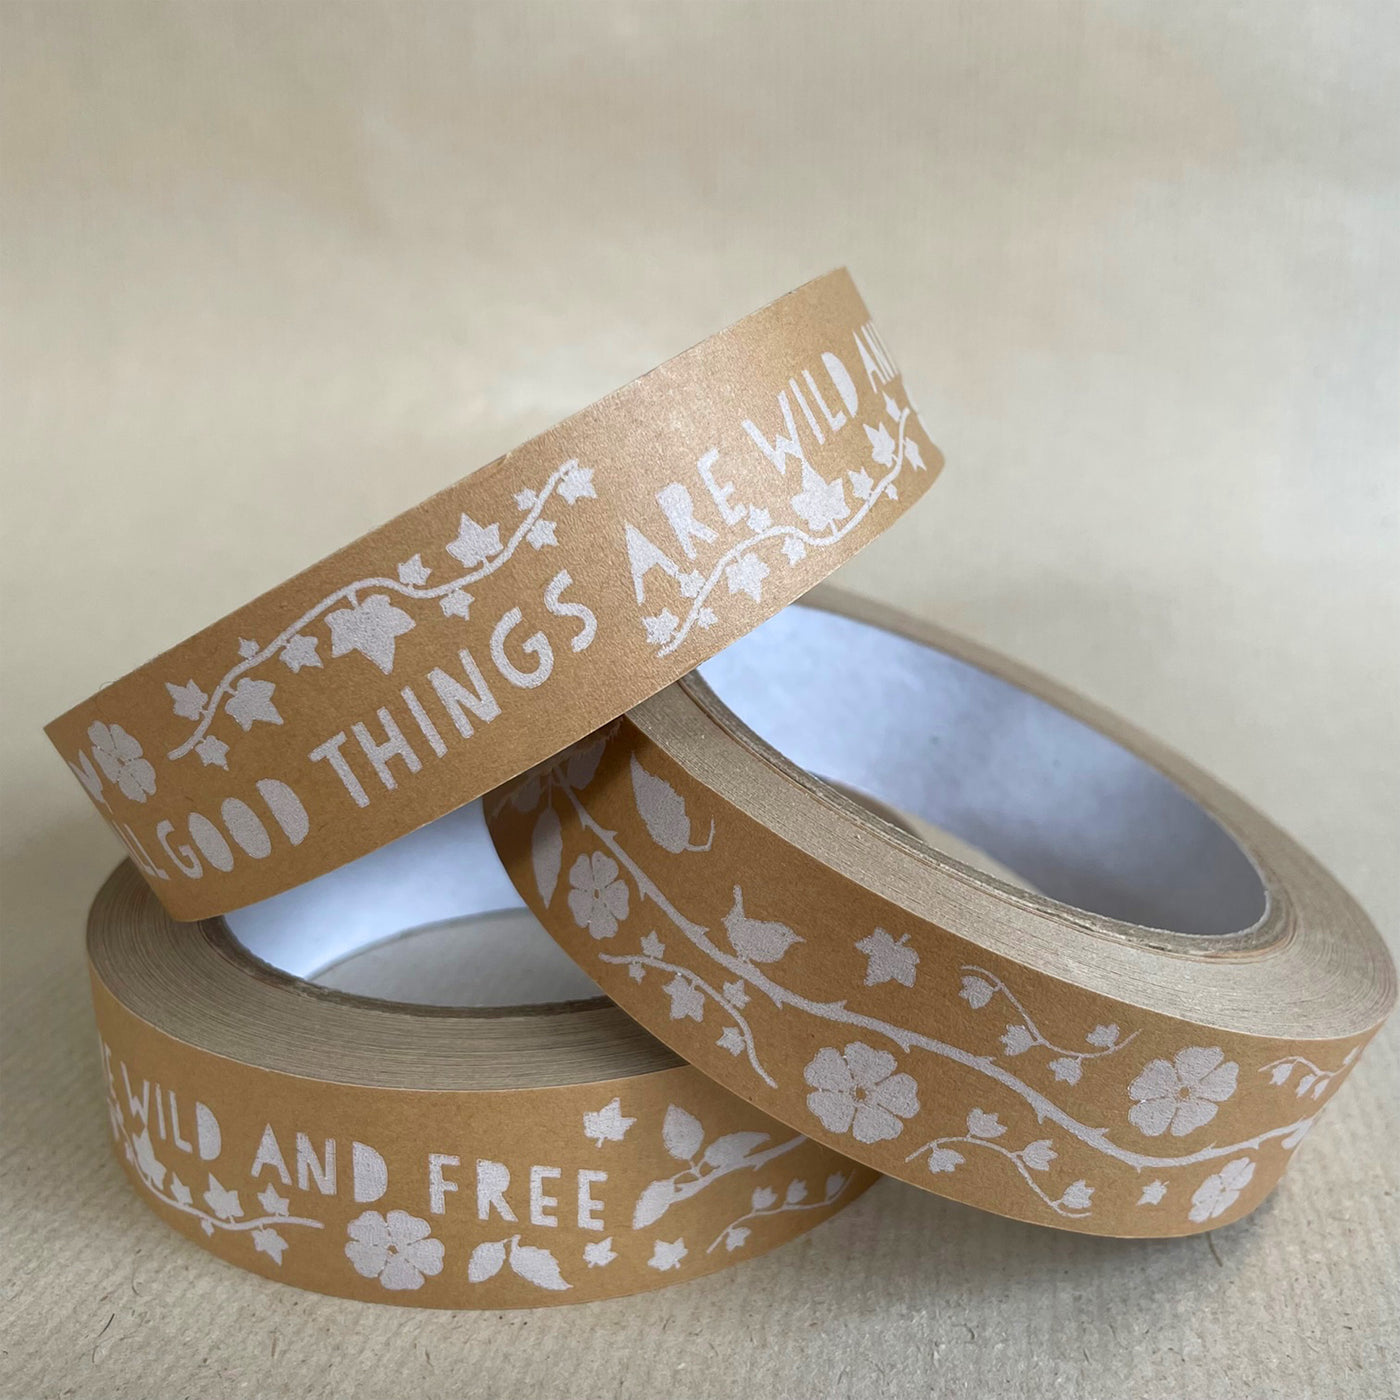 Kraft Paper Tape - All Good Things are Wild & Free - Thoreau